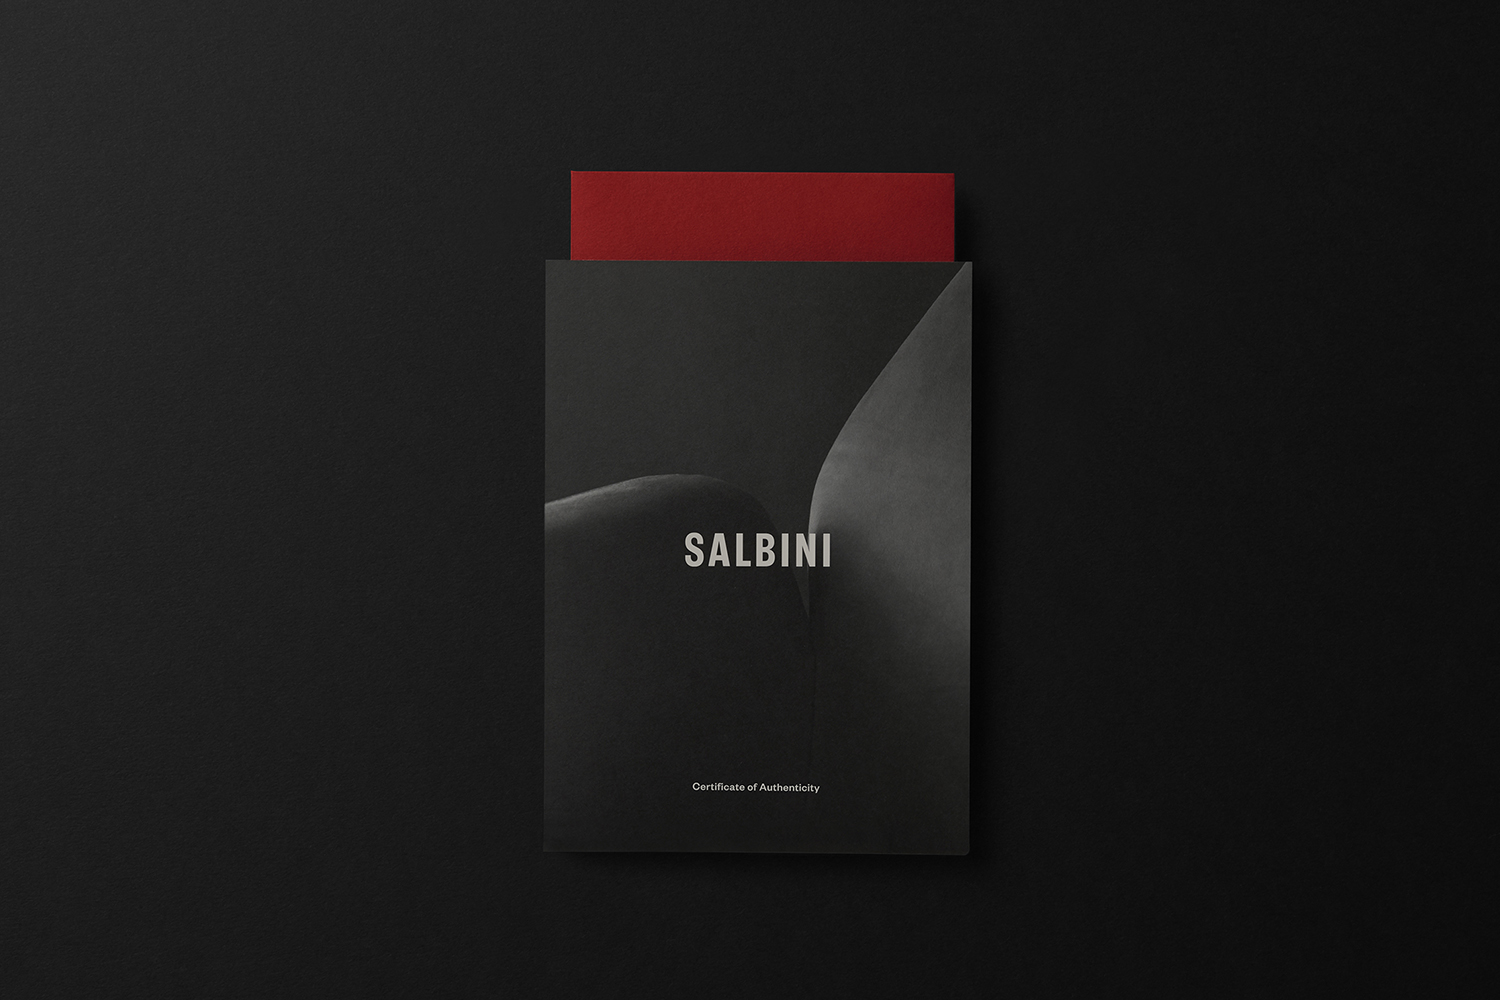 Visual identity by Studio Brave for Italian online furniture retailer Salbini.